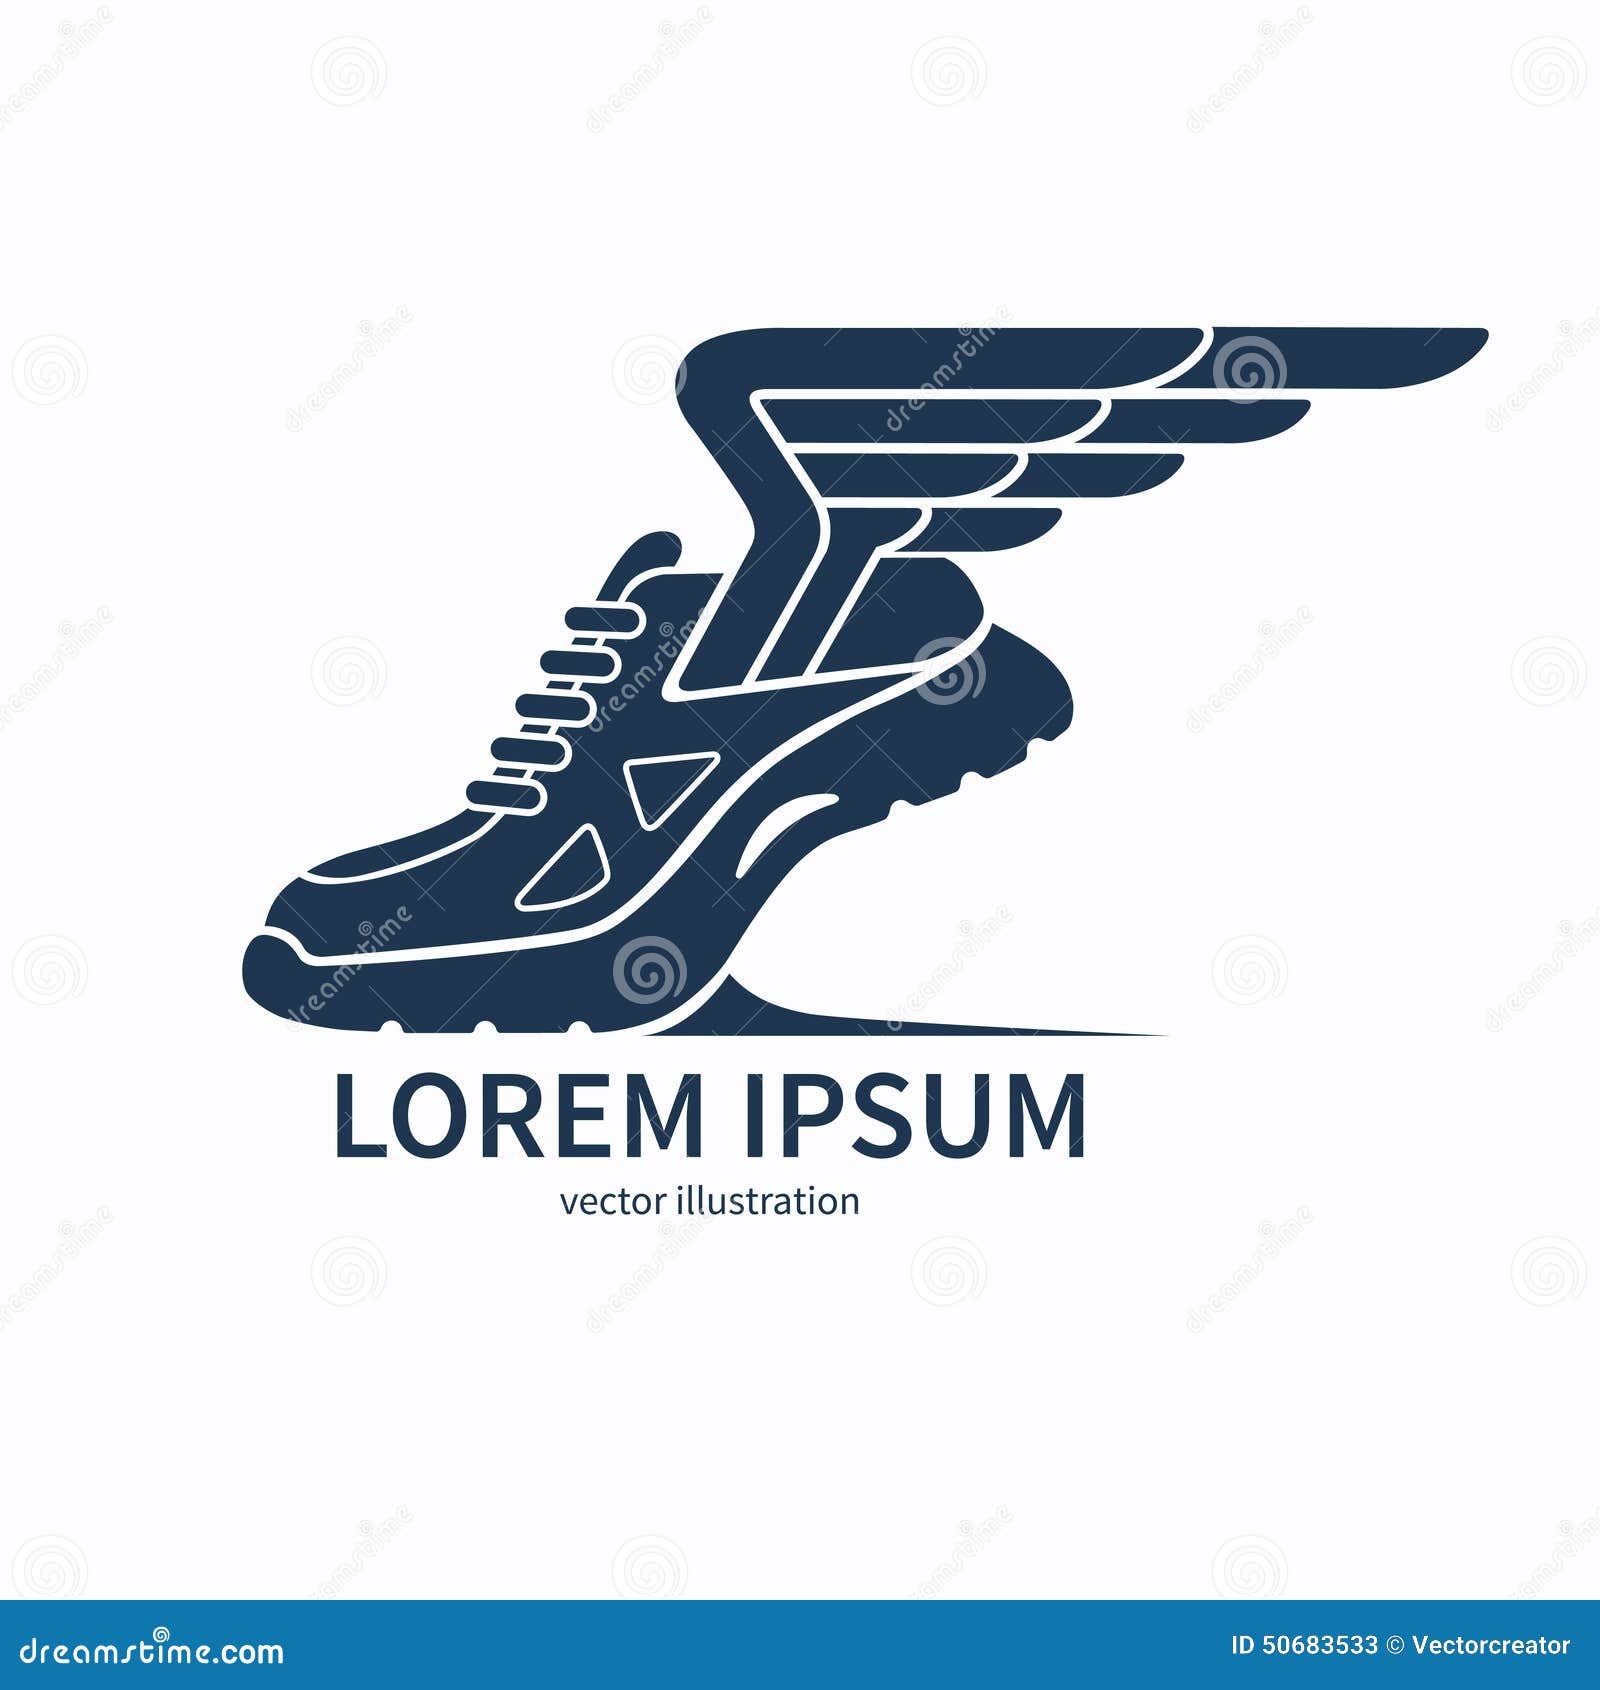  speeding running shoe , icon or logo